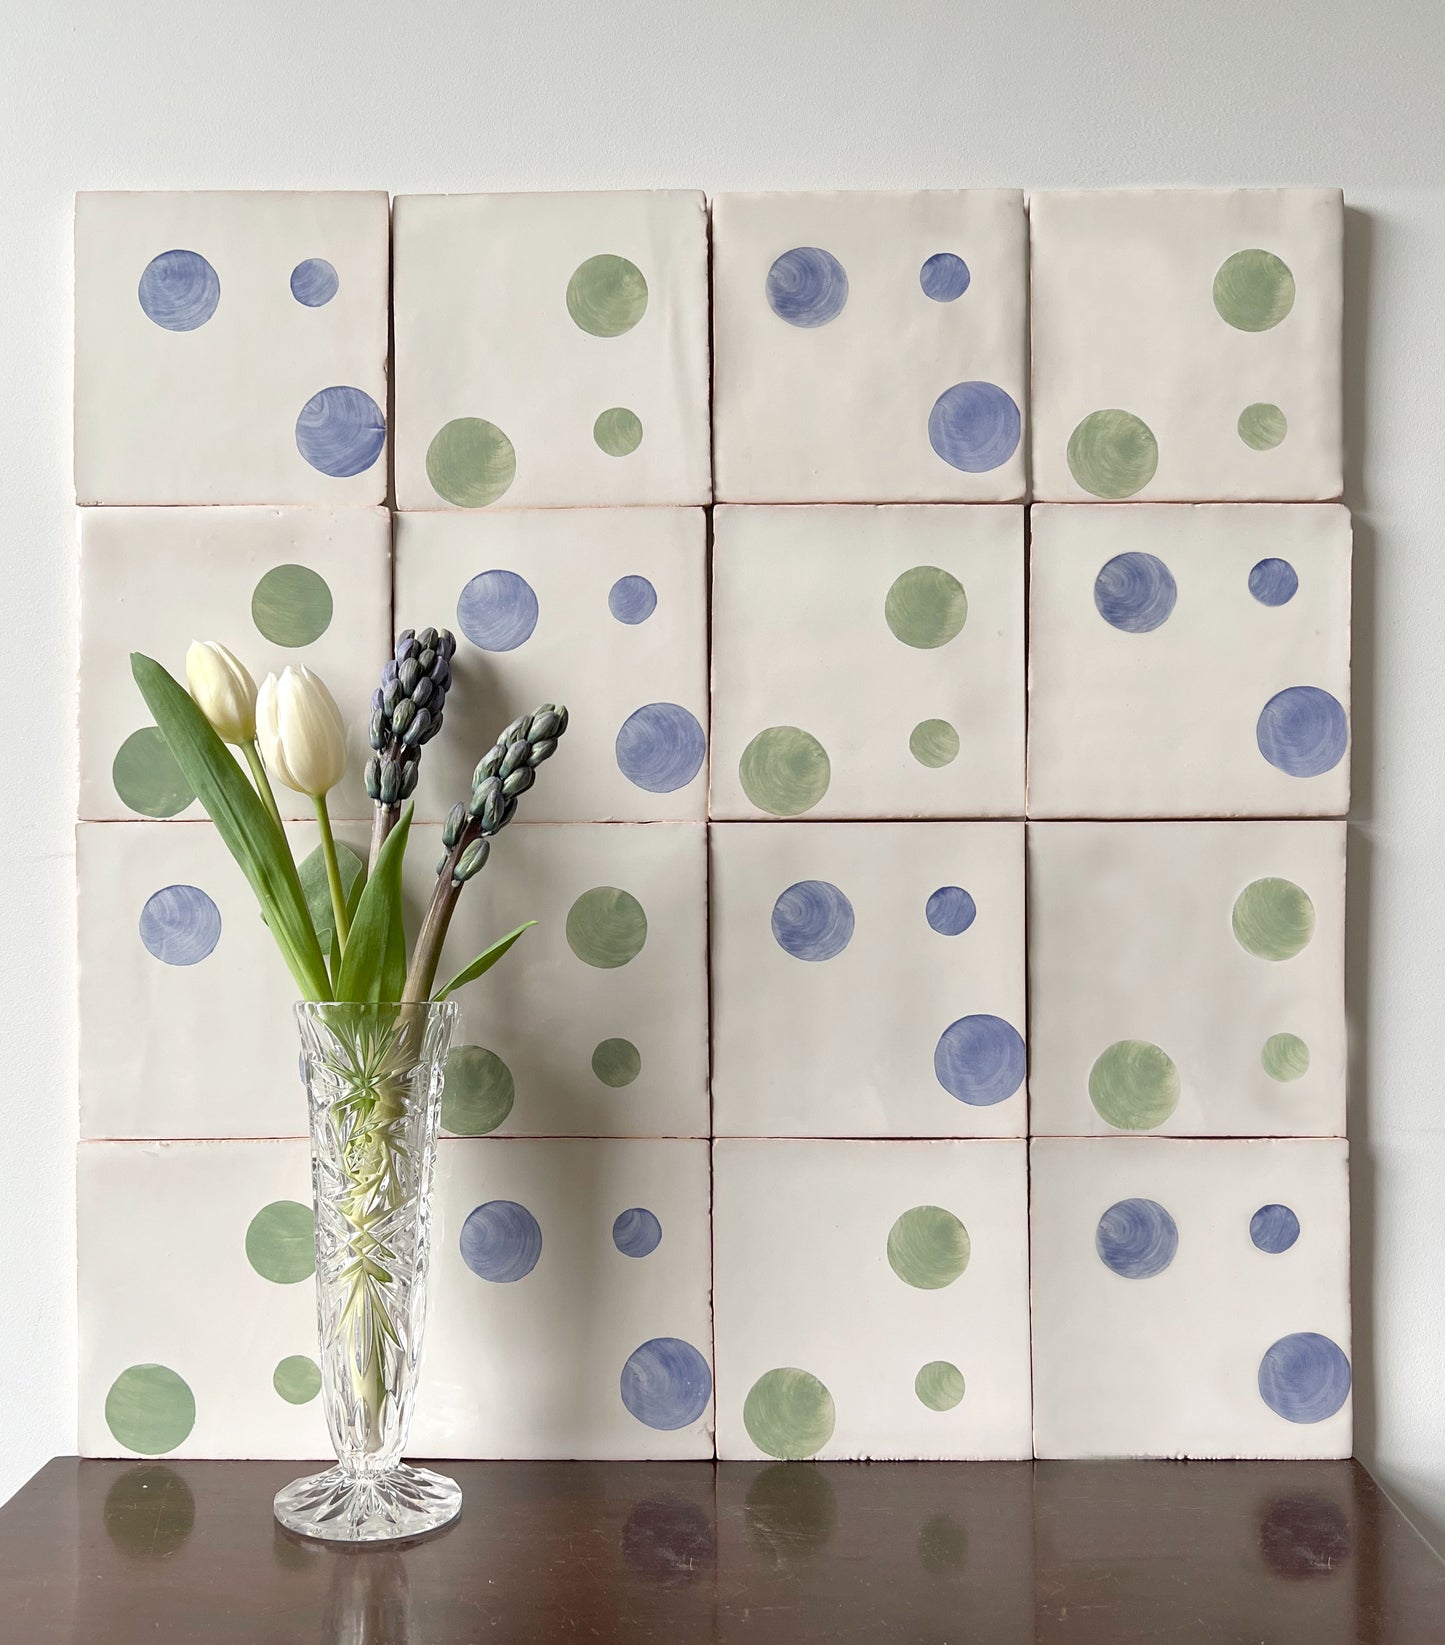 Spot tiles in Sage Green and Violet Blue